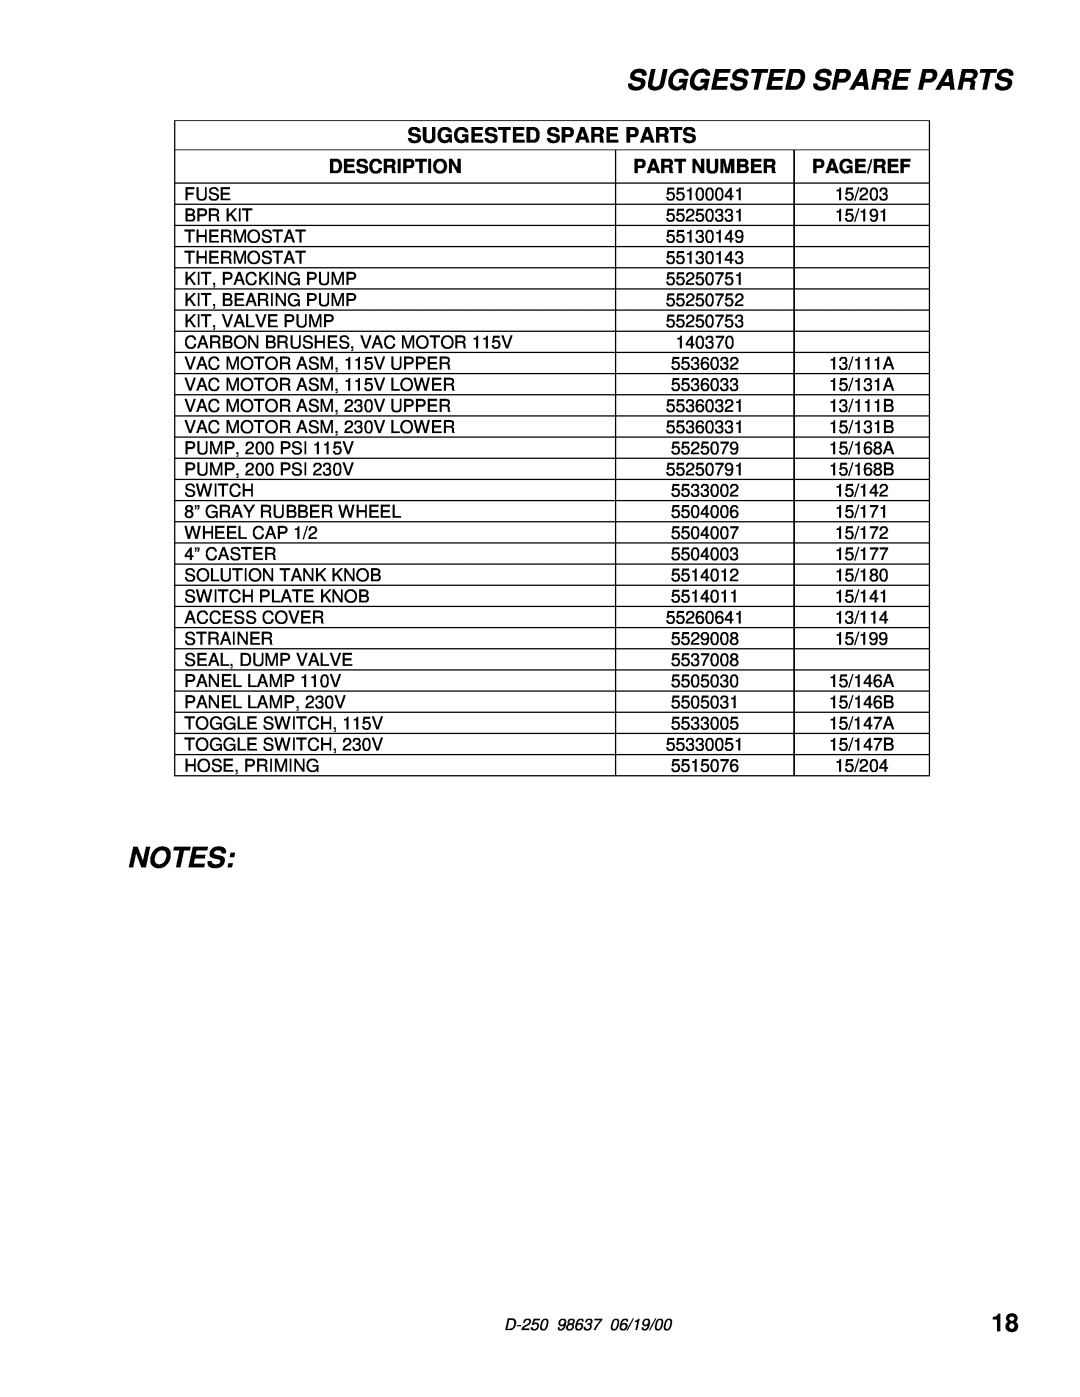 Windsor D250 manual Suggested Spare Parts, Description, Part Number, Page/Ref 